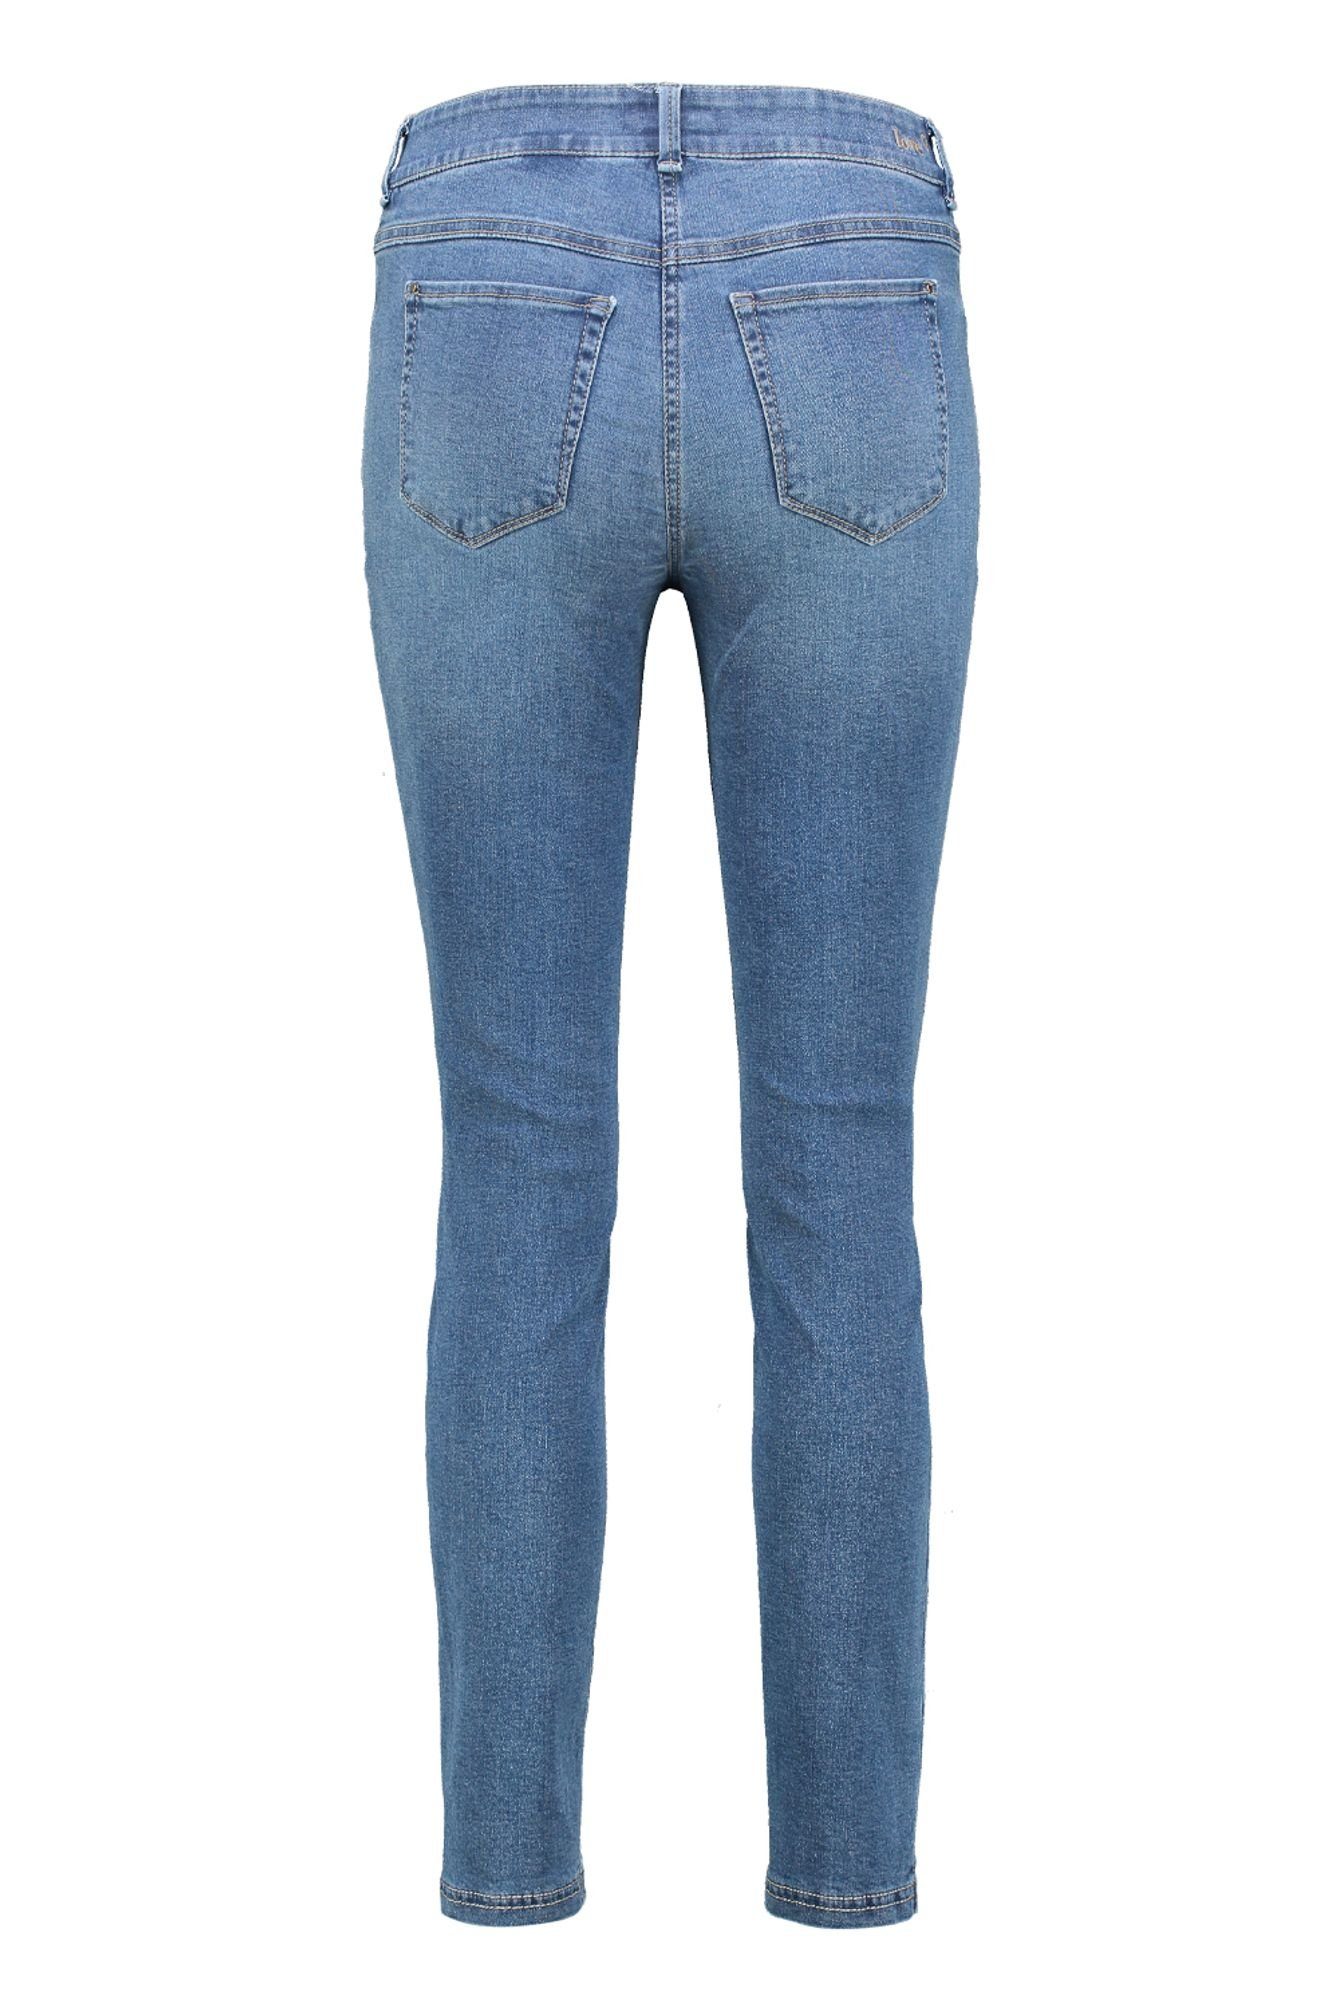 Atelier GARDEUR 5-Pocket-Jeans Vicky743 blau (7167)